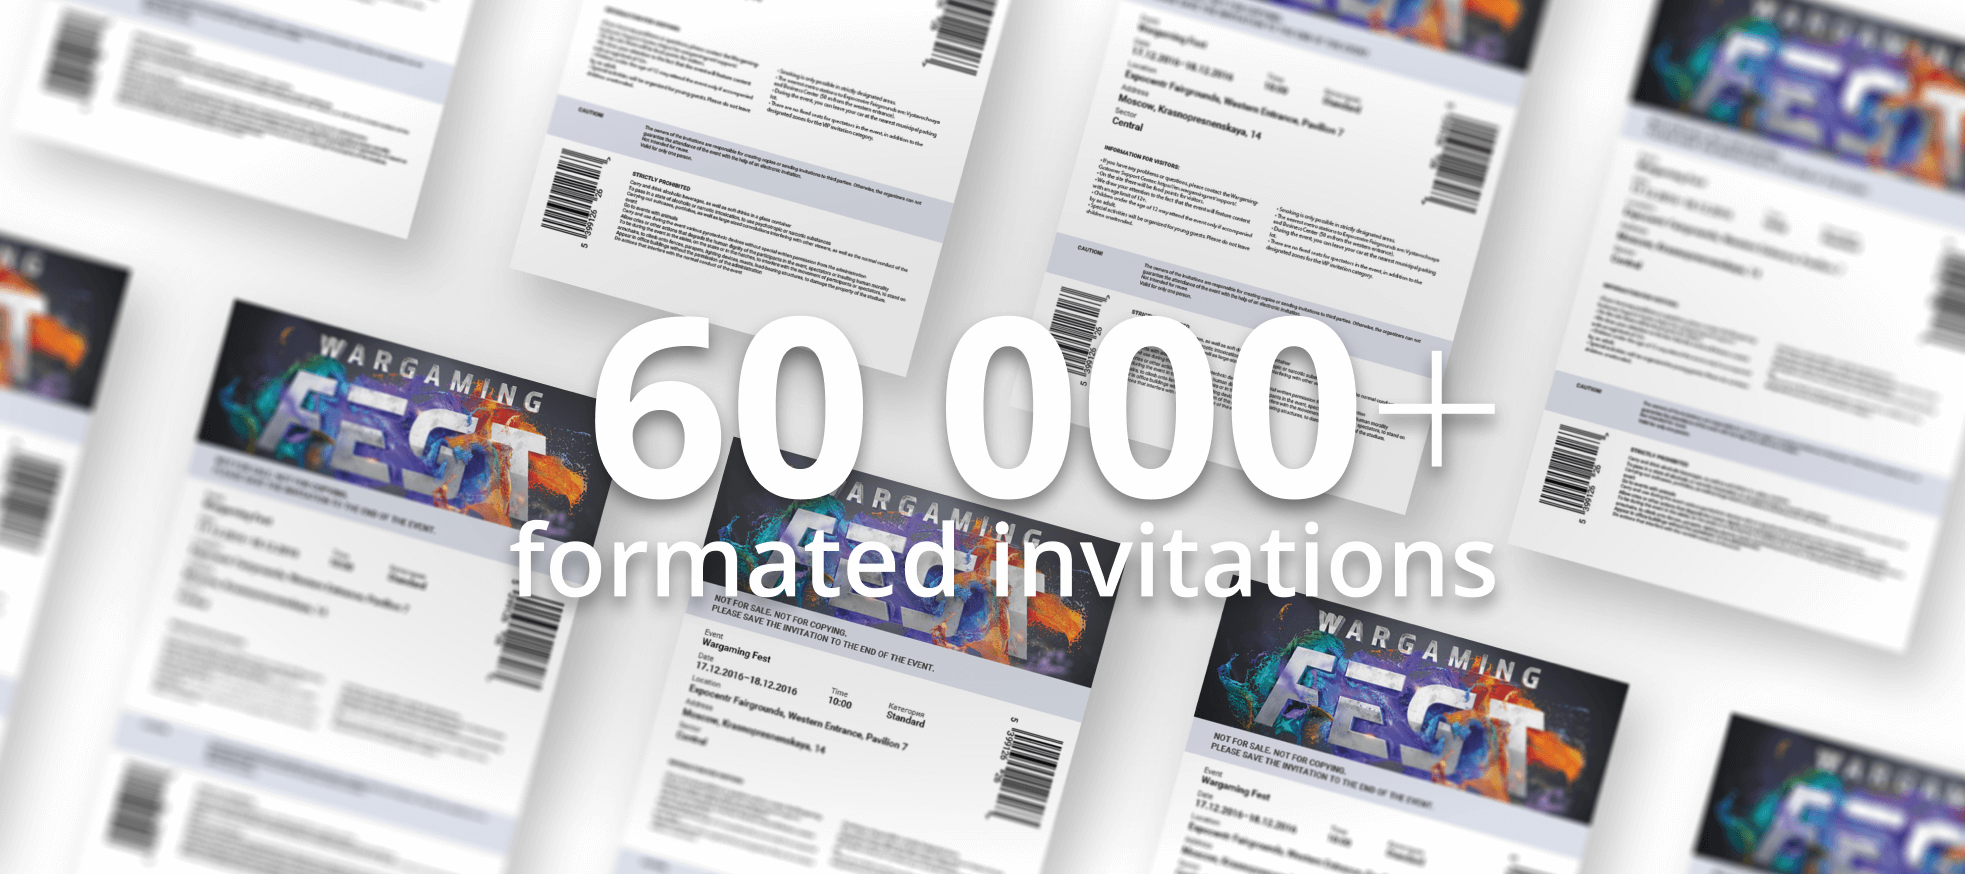 the service provide more than 60 000 invitations